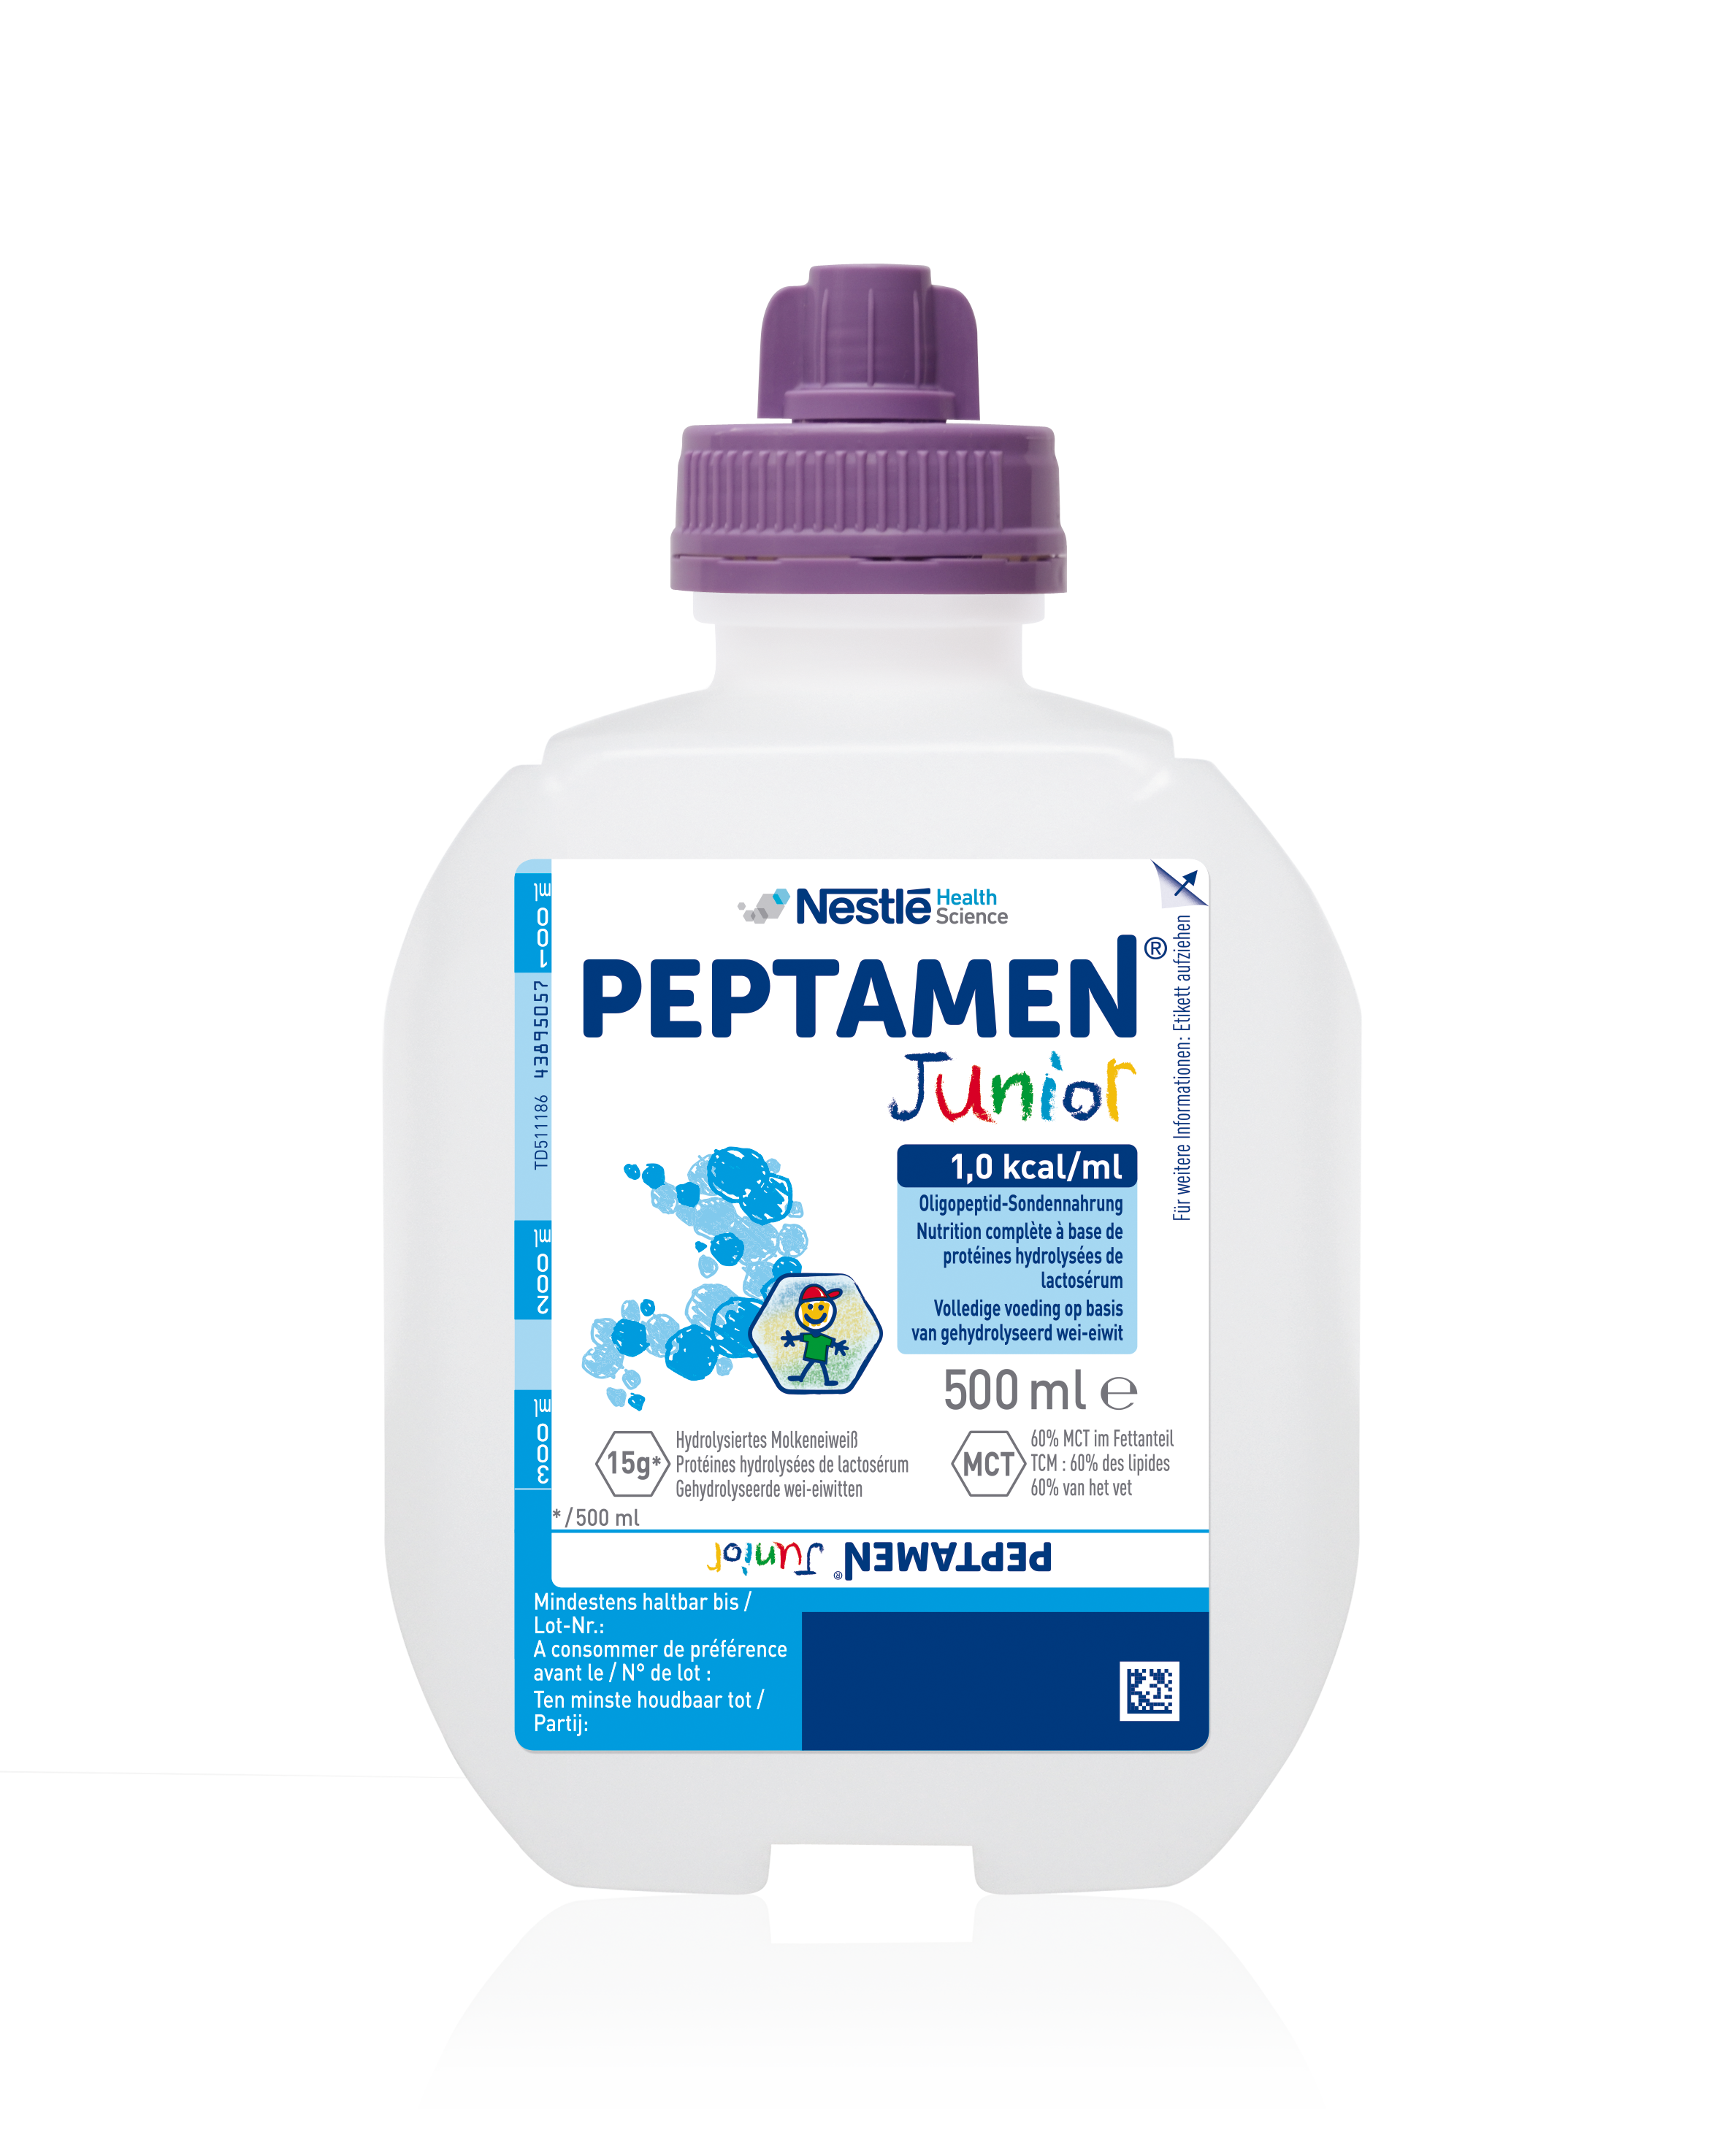 Peptamen Junior | Nestlé Health Science